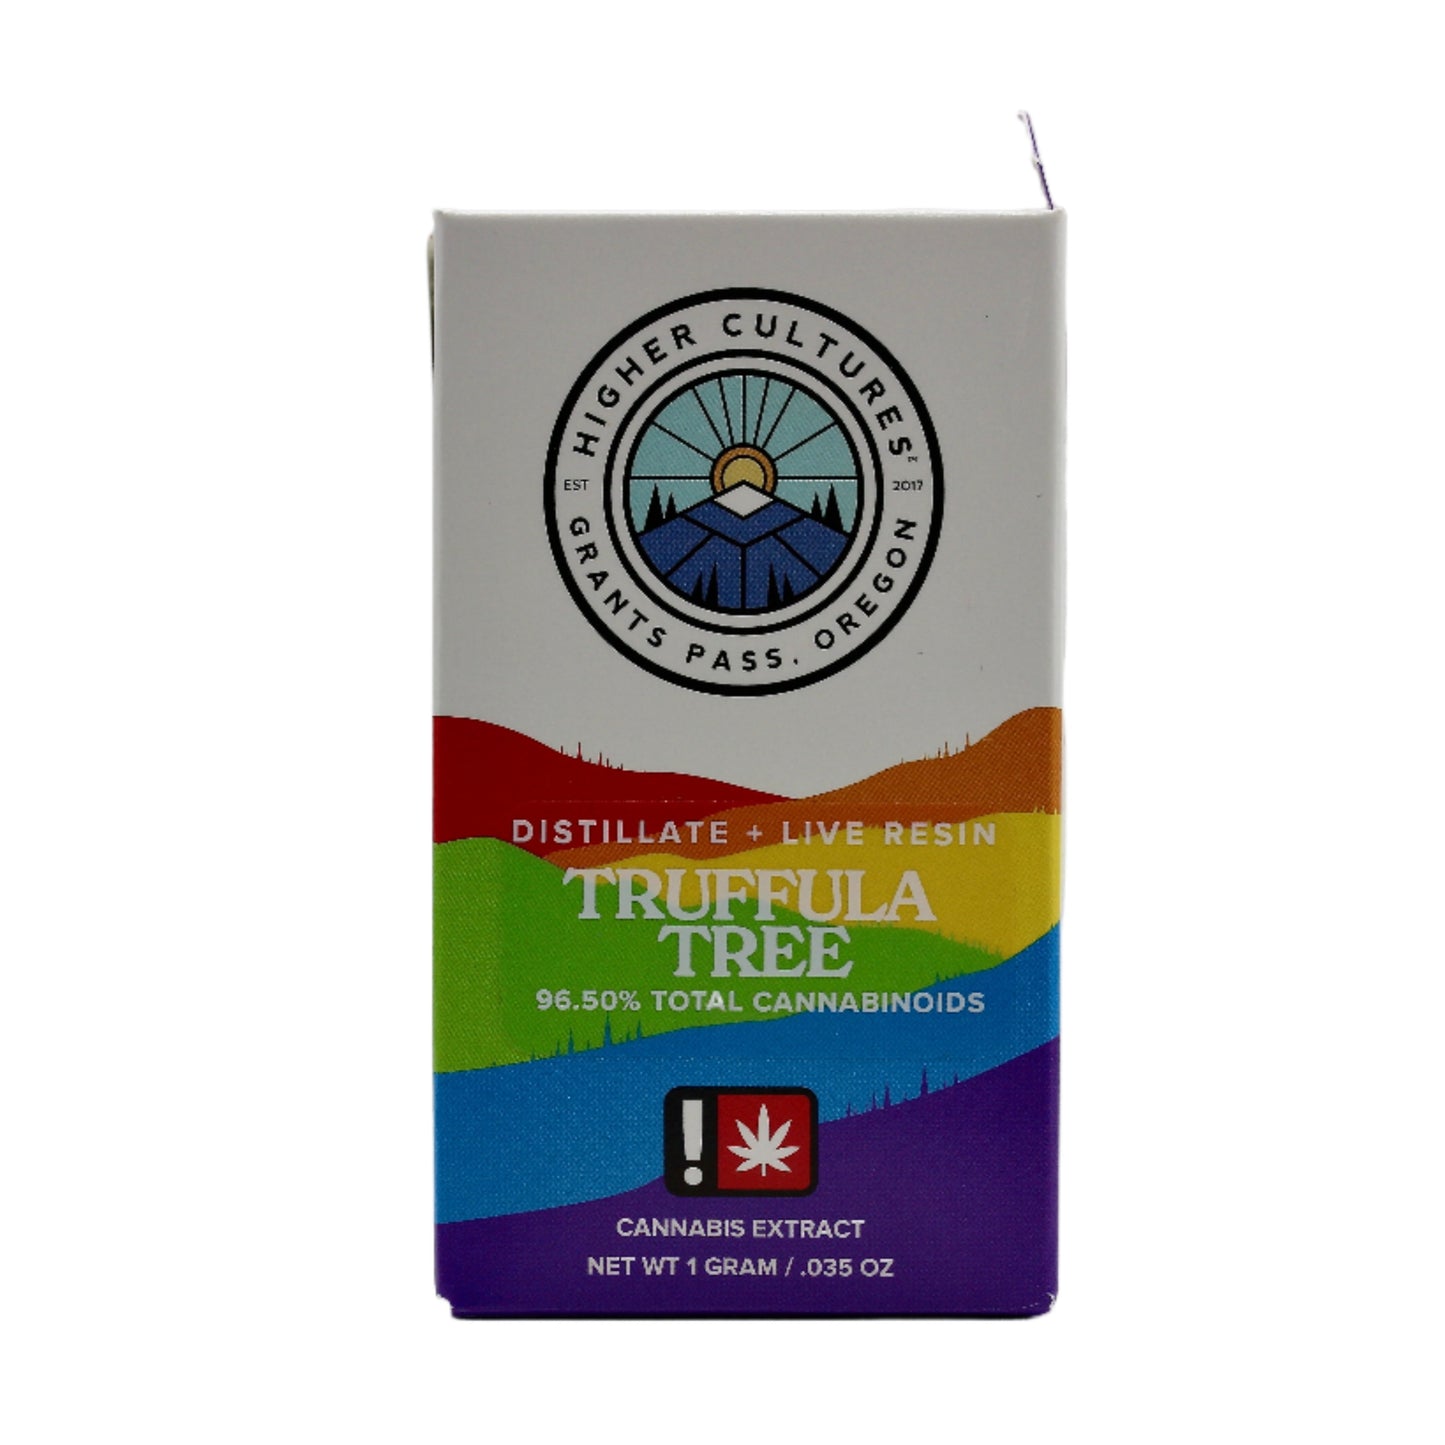 Higher Cultures | Truffula Tree | 1g Distillate + Live Resin Cartridge